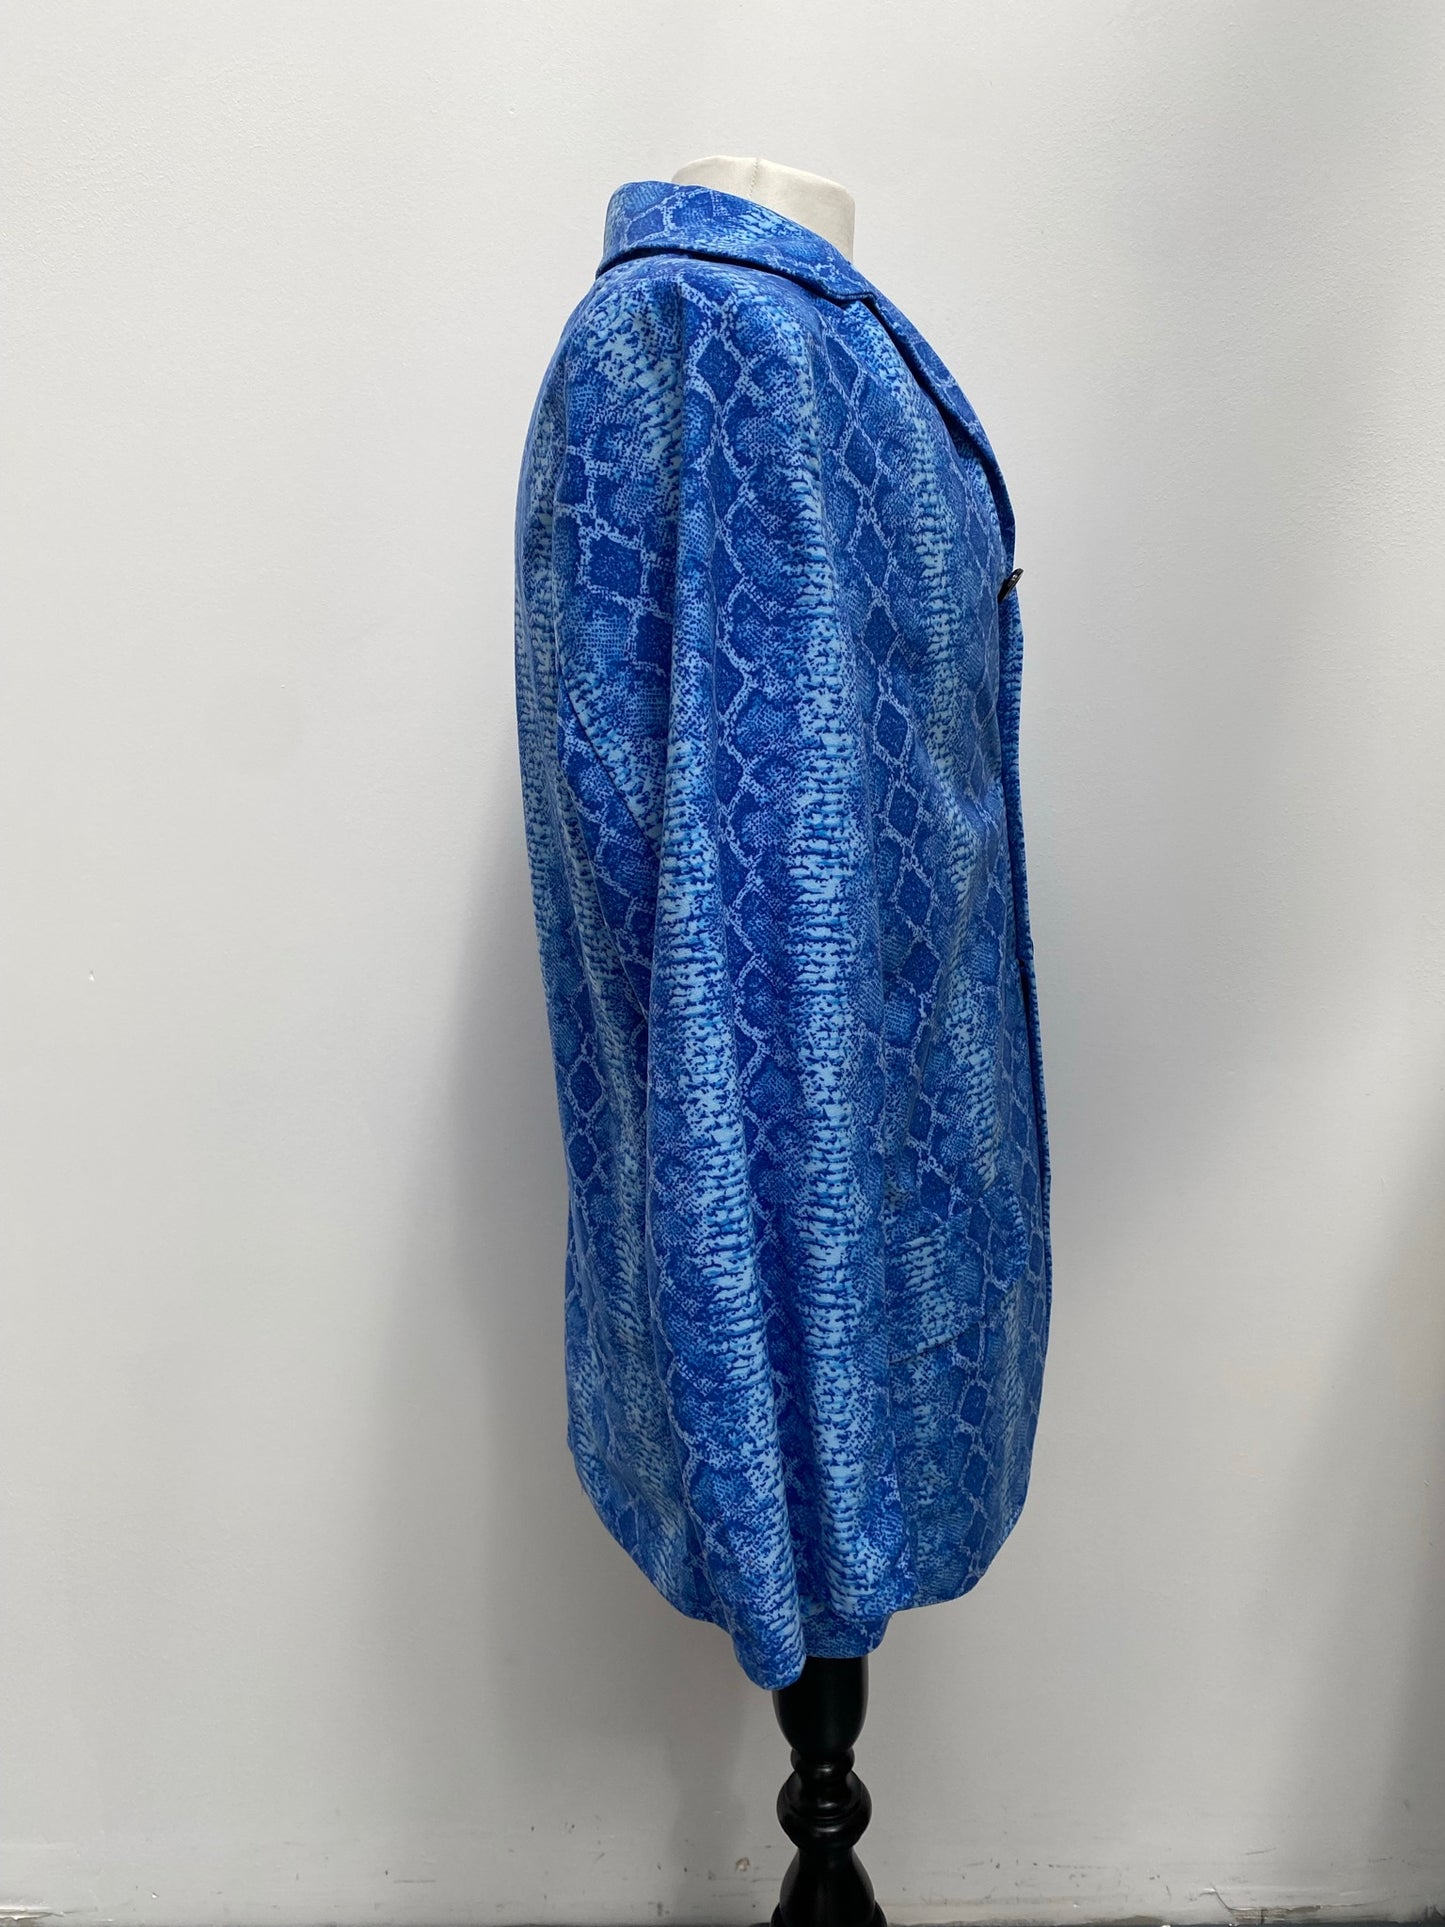 1970s/1980s Style Blue Snakeskin Print Suit Size Large - Ex Hire Fancy Dress Costumes